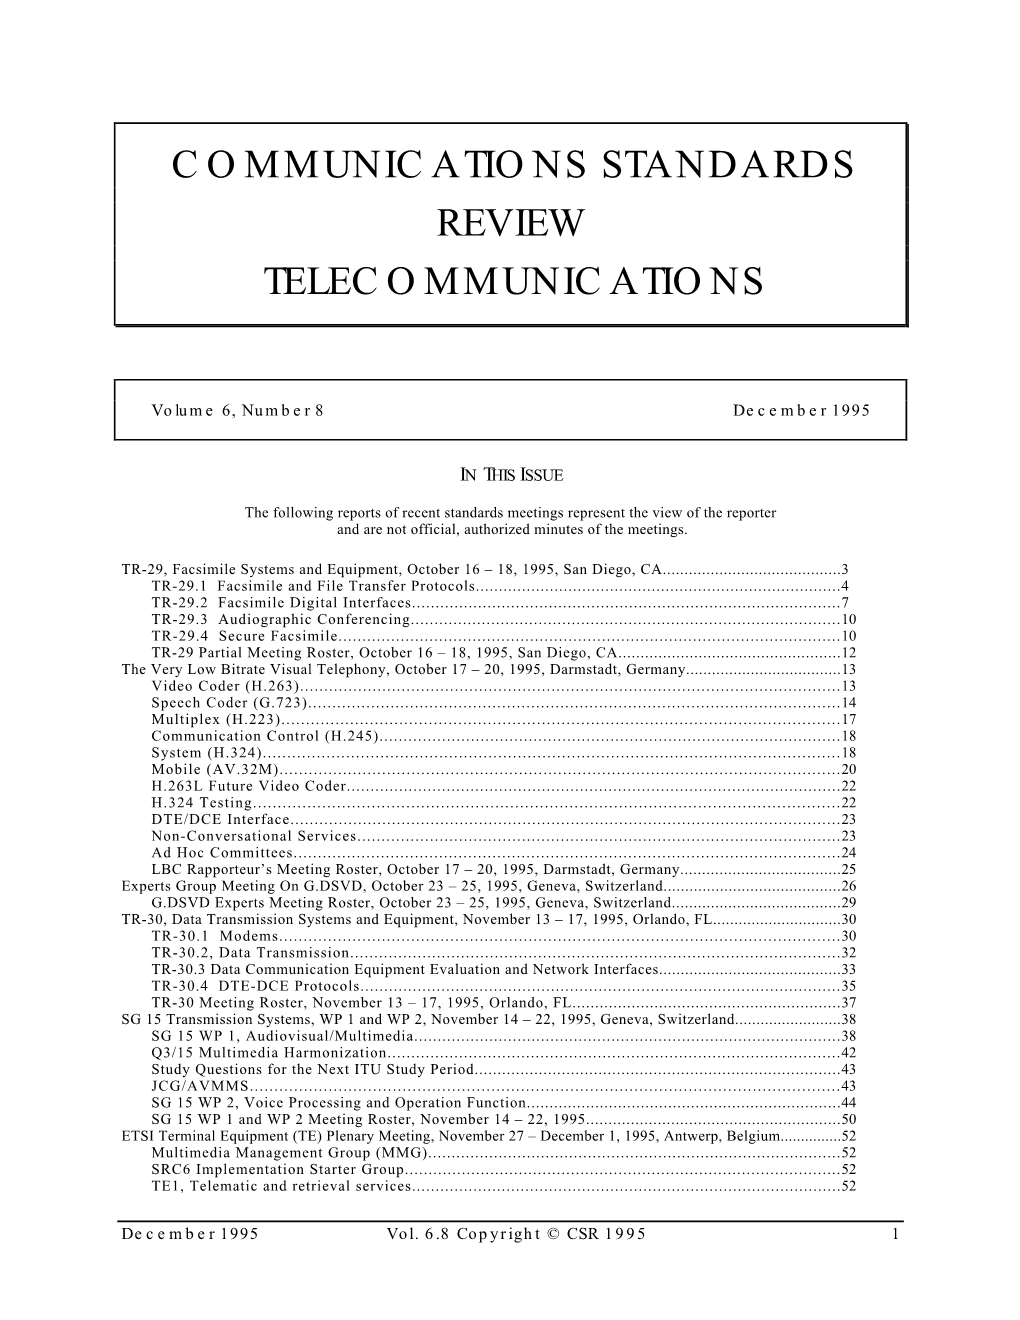 Communications Standards Review Telecommunications